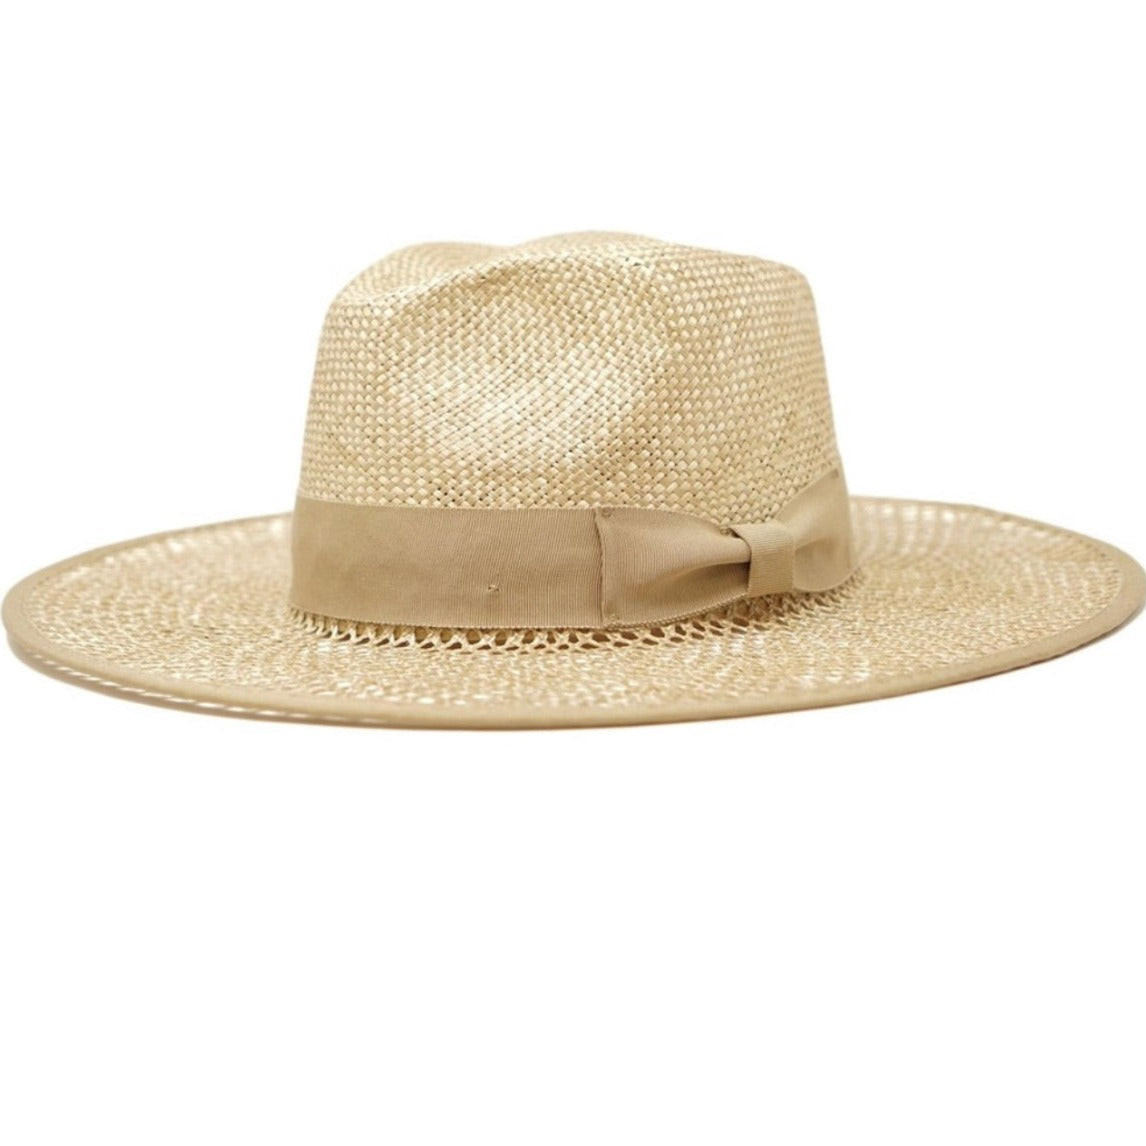 santiago straw hat for sunny days